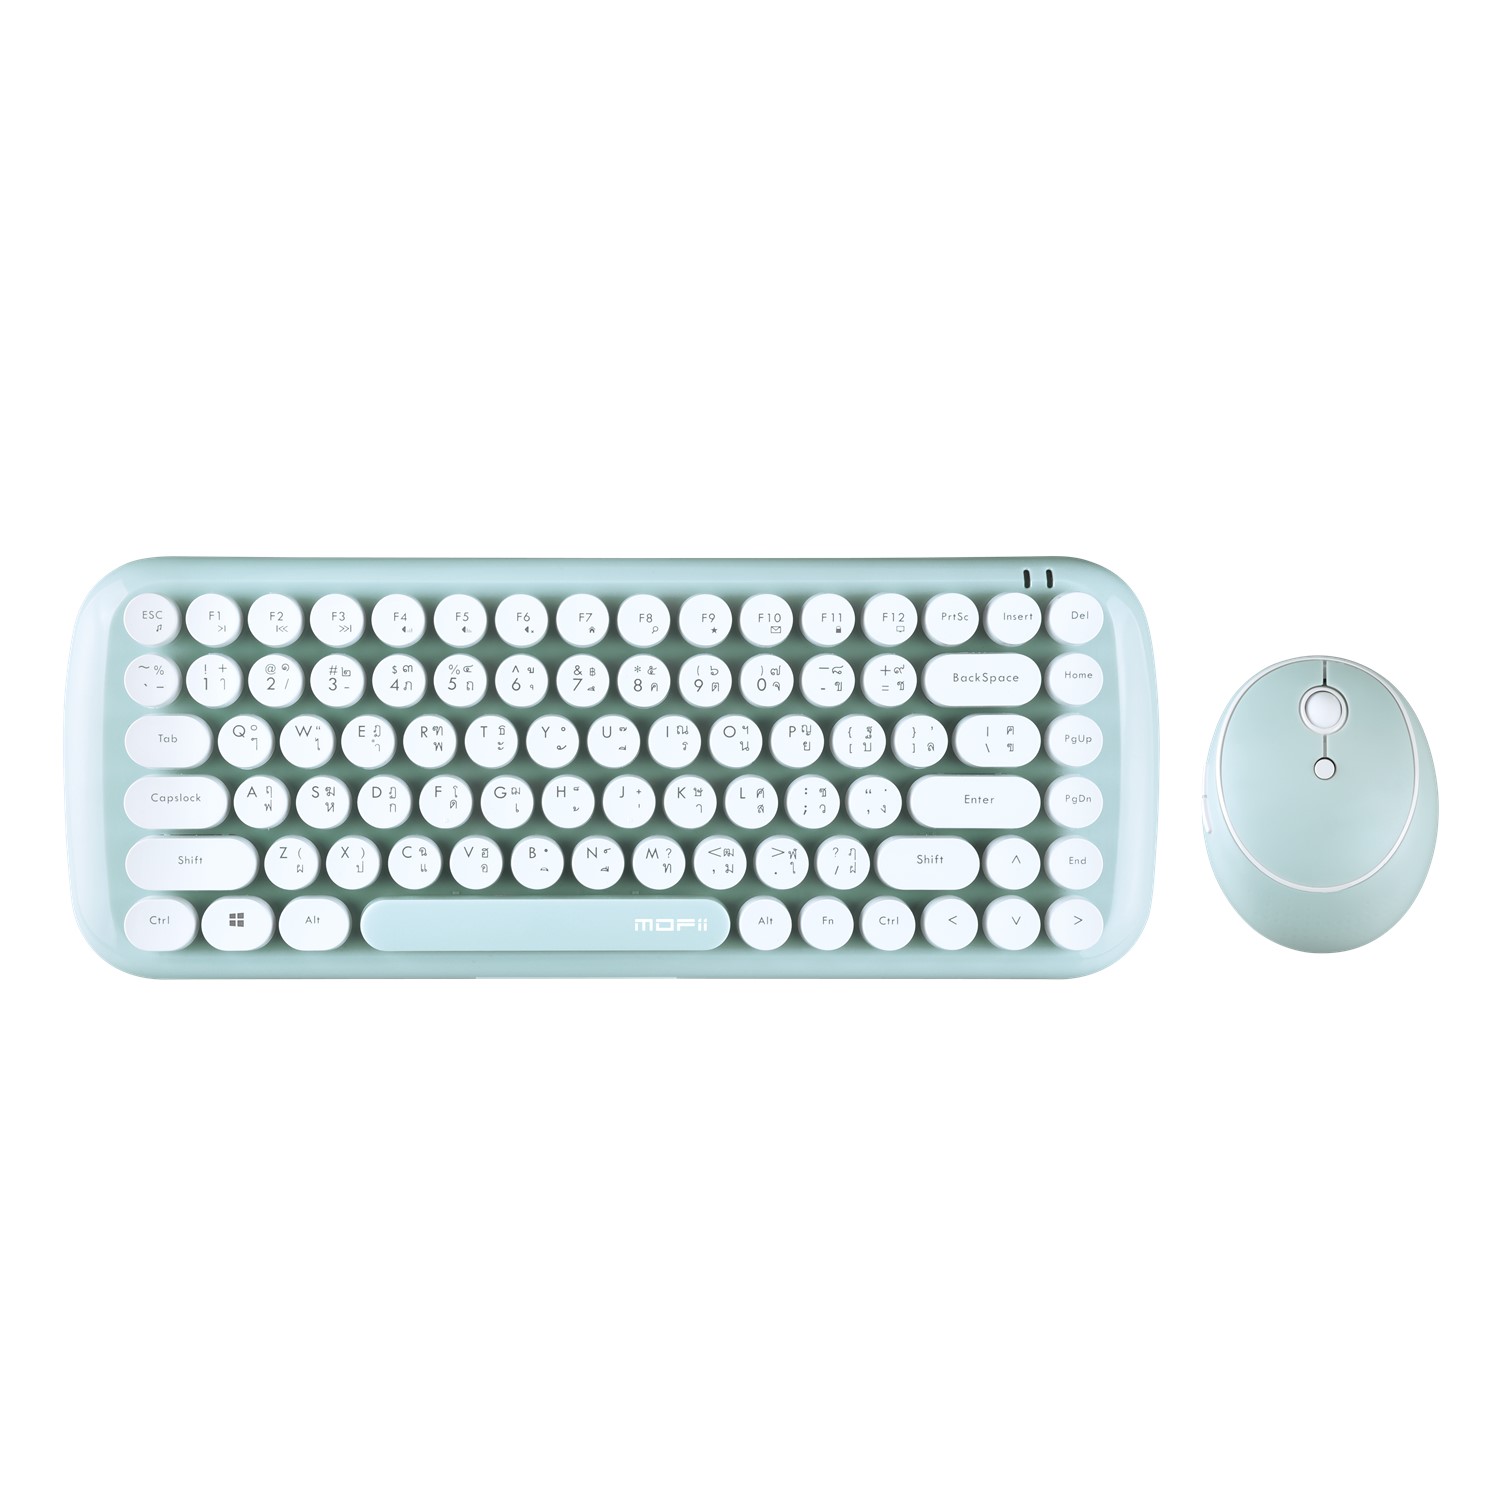 LOFT เมาส์และคีย์บอร์ด MOFII CANDY-S Keyboard Mouse Combo Set GREEN